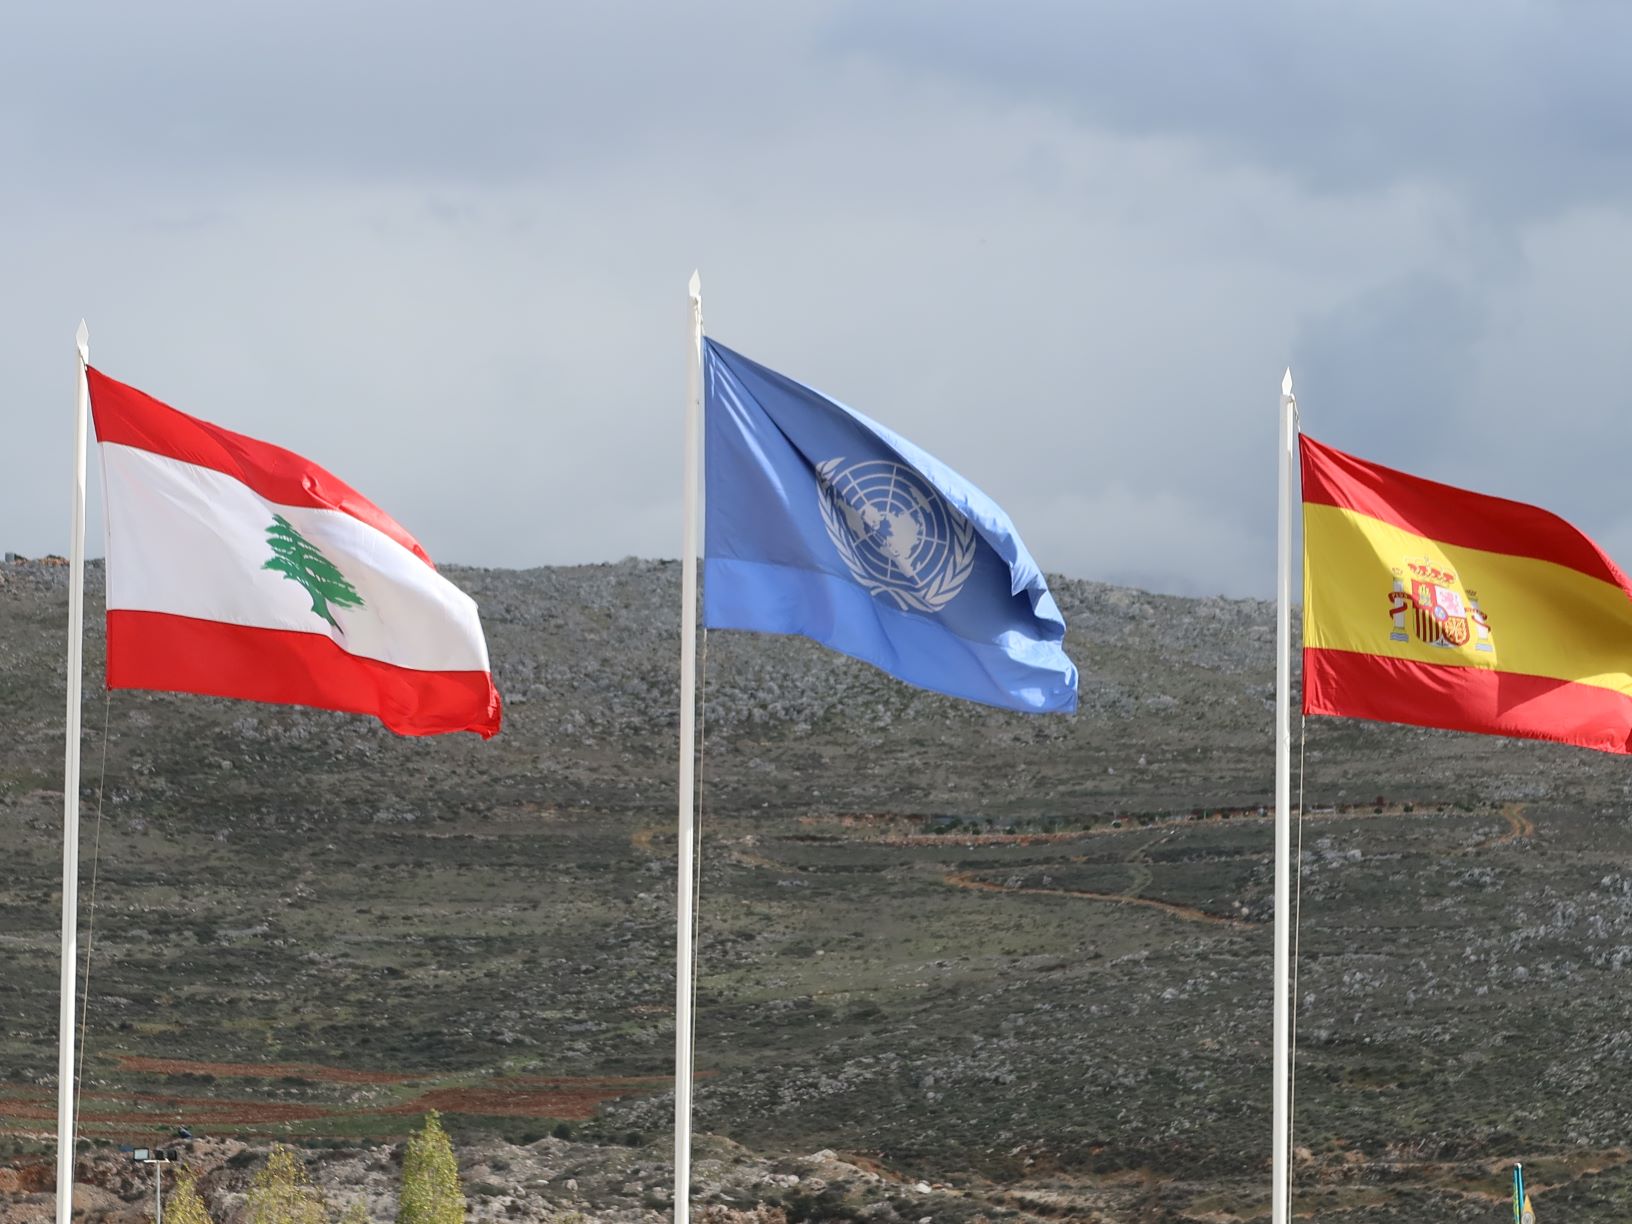 UN, Lebanon and Spain flags